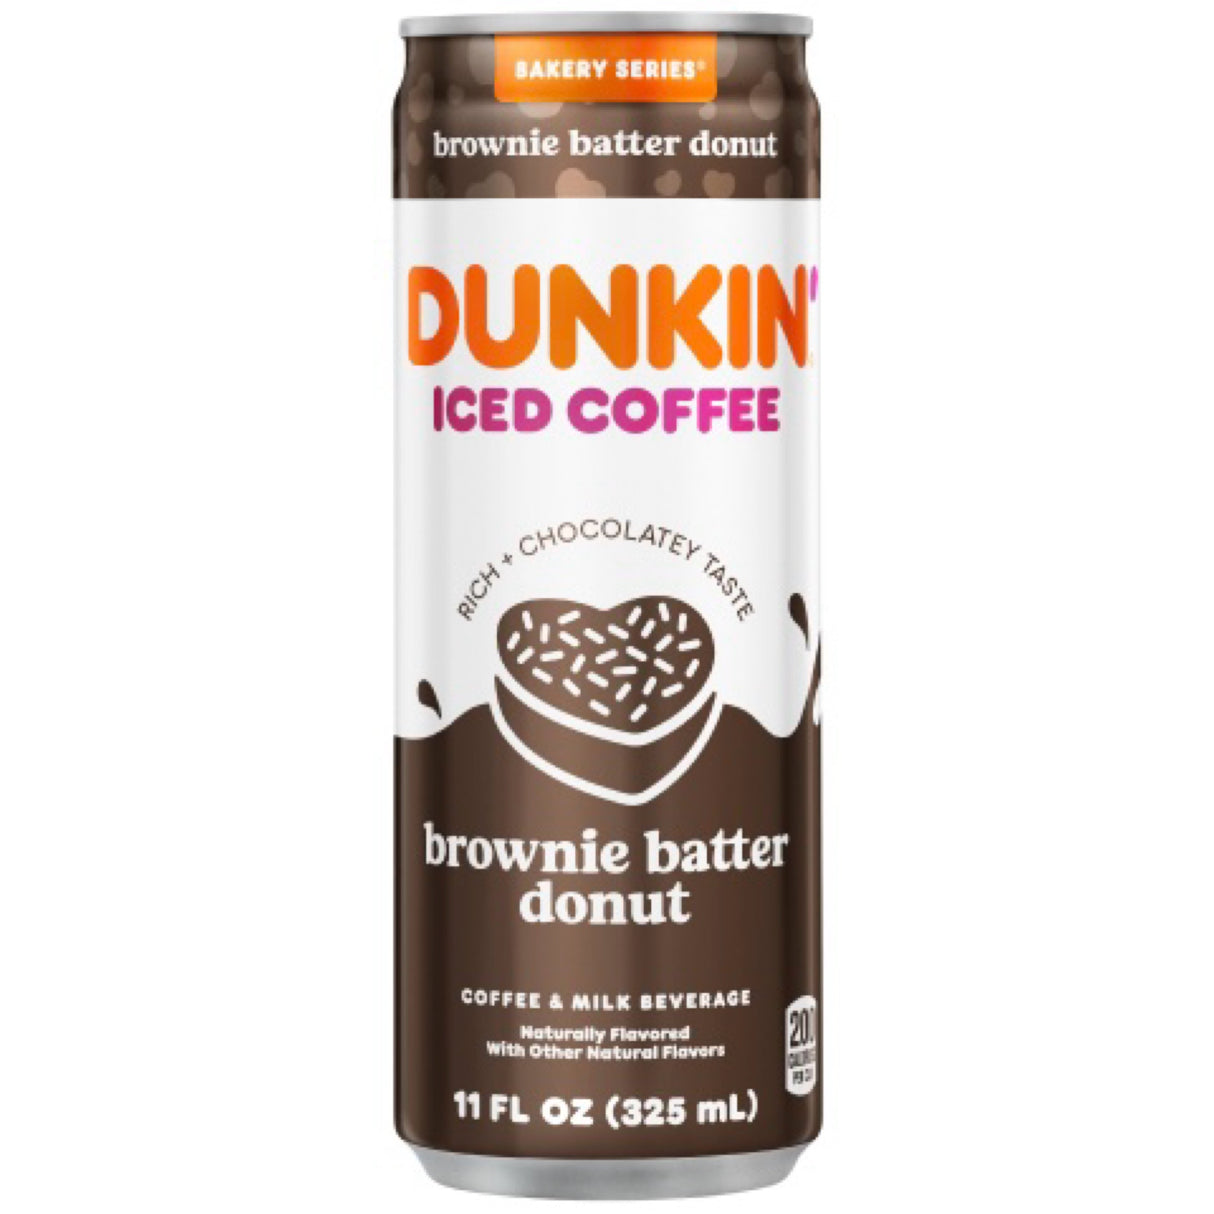 Dunkin’ Iced Coffee Brownie Batter Donut